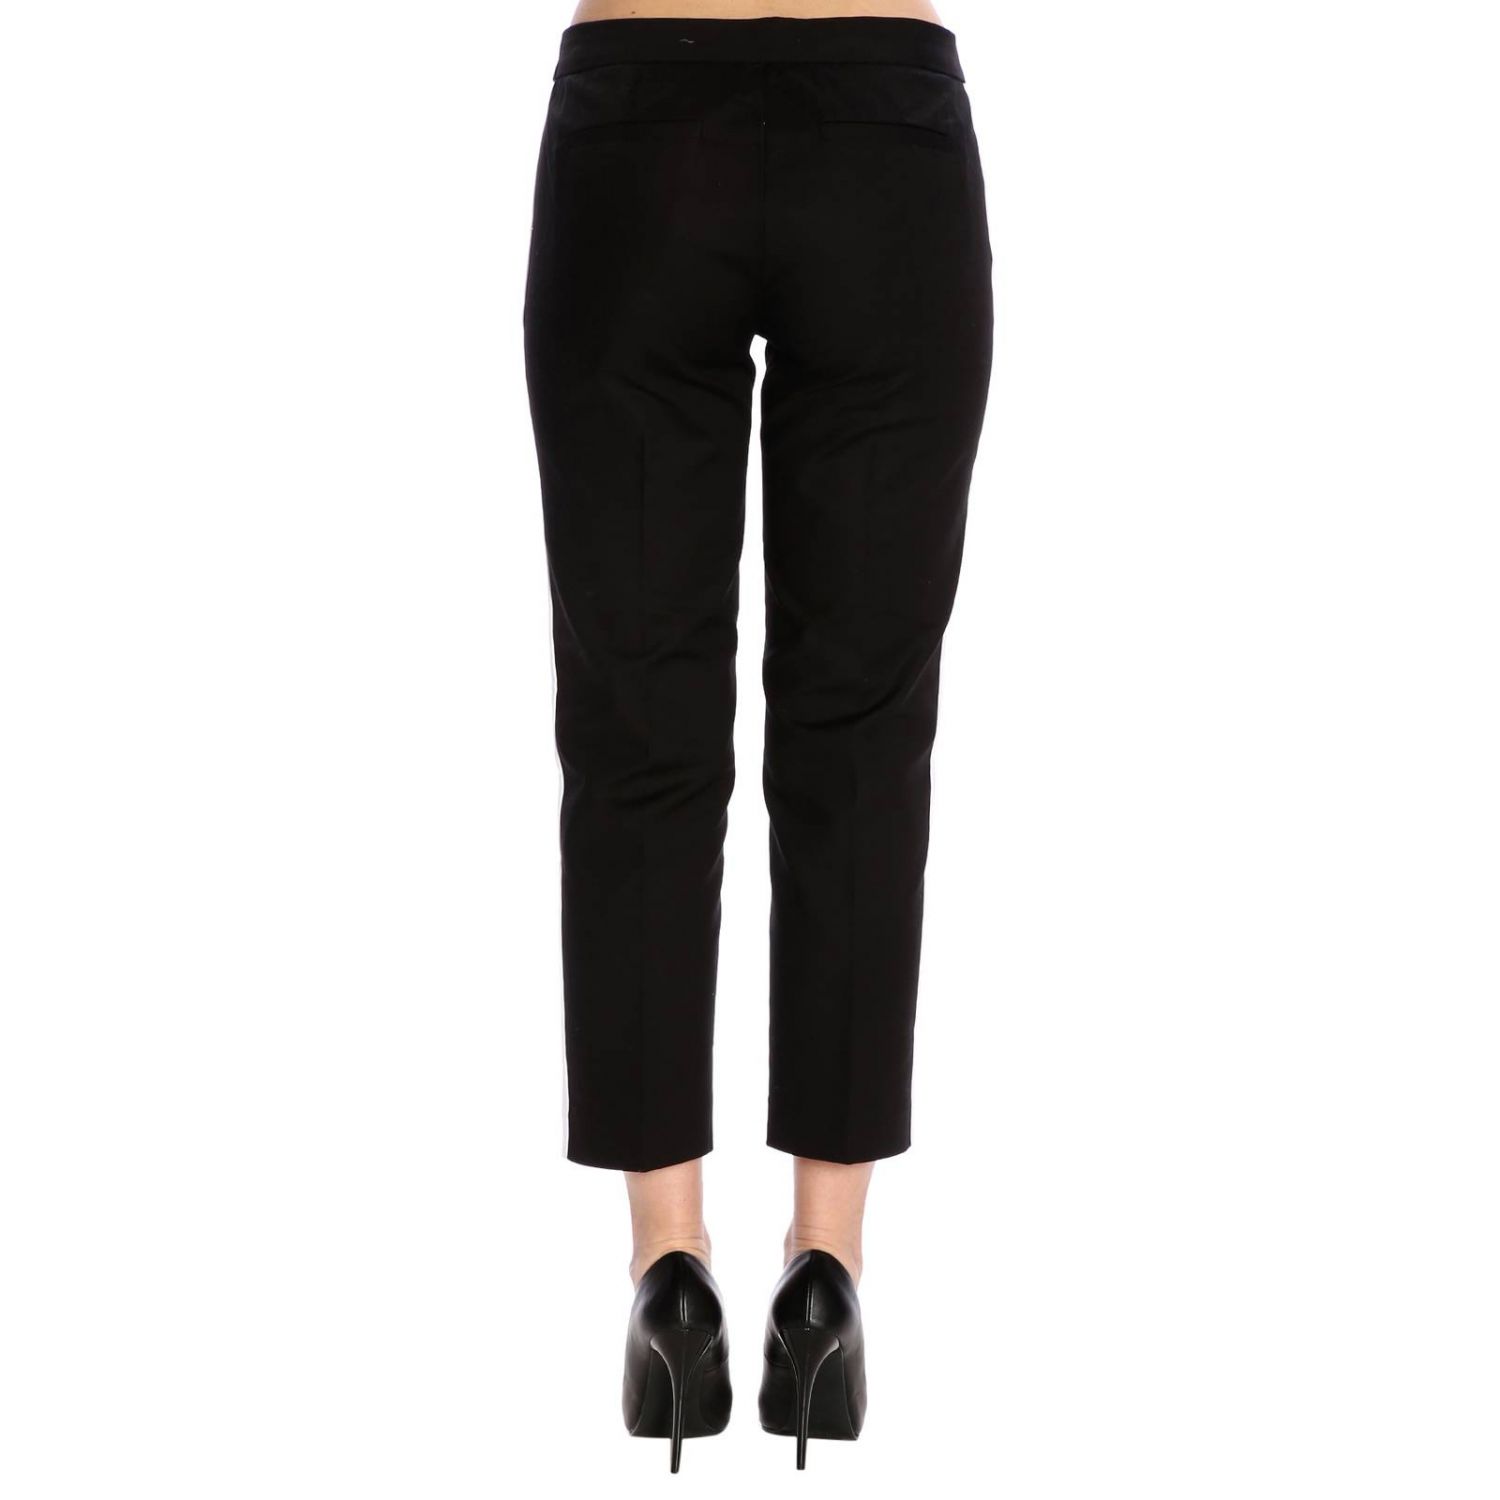 Michael Kors Outlet: pants for woman - Black | Michael Kors pants ...